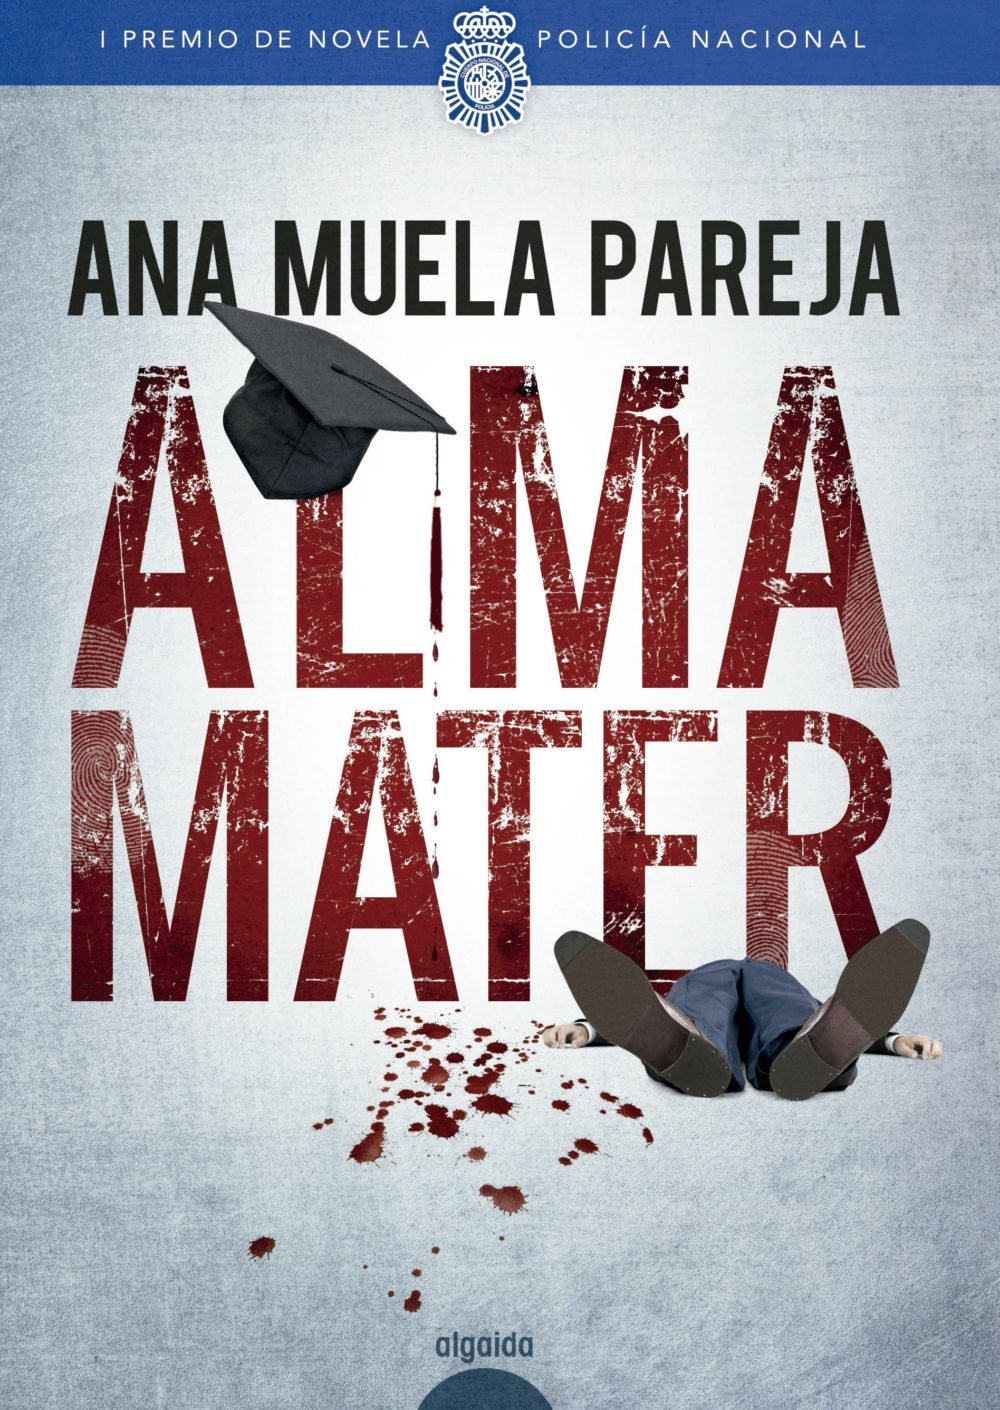 Ana Muela Pareja, ganadora del I Premio de Novela Policía Nacional